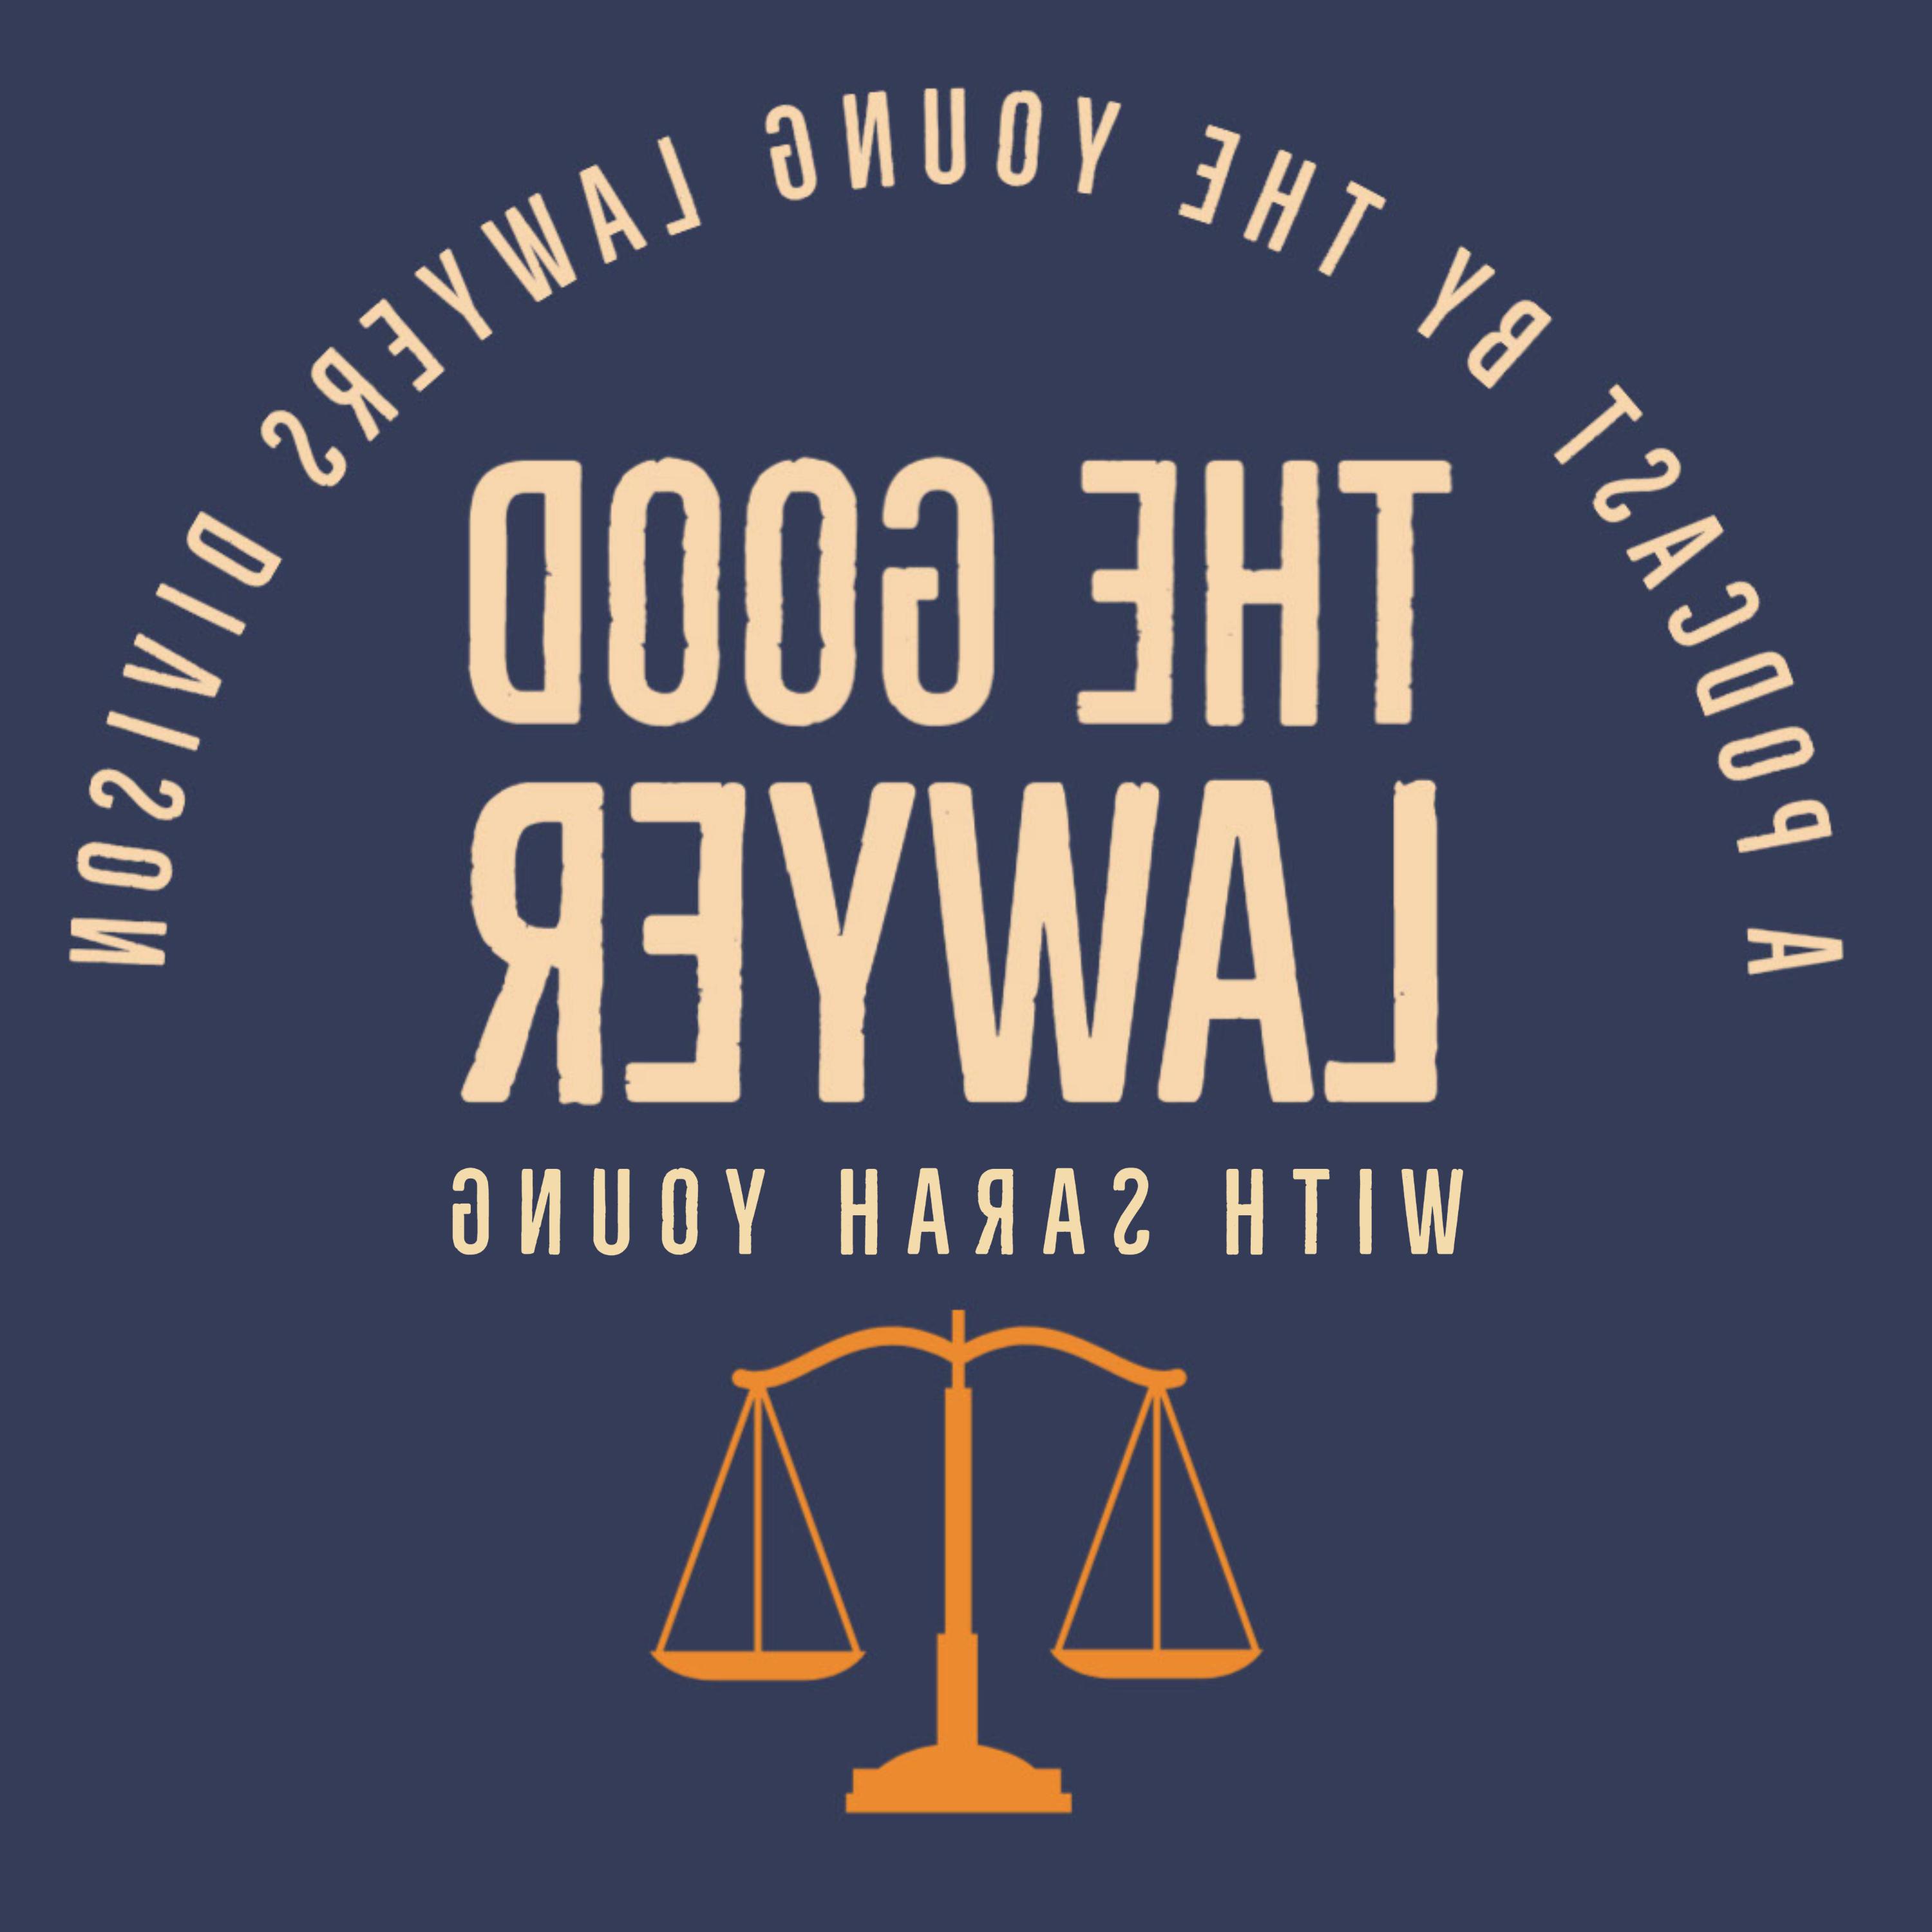 The Good Lawyer logo